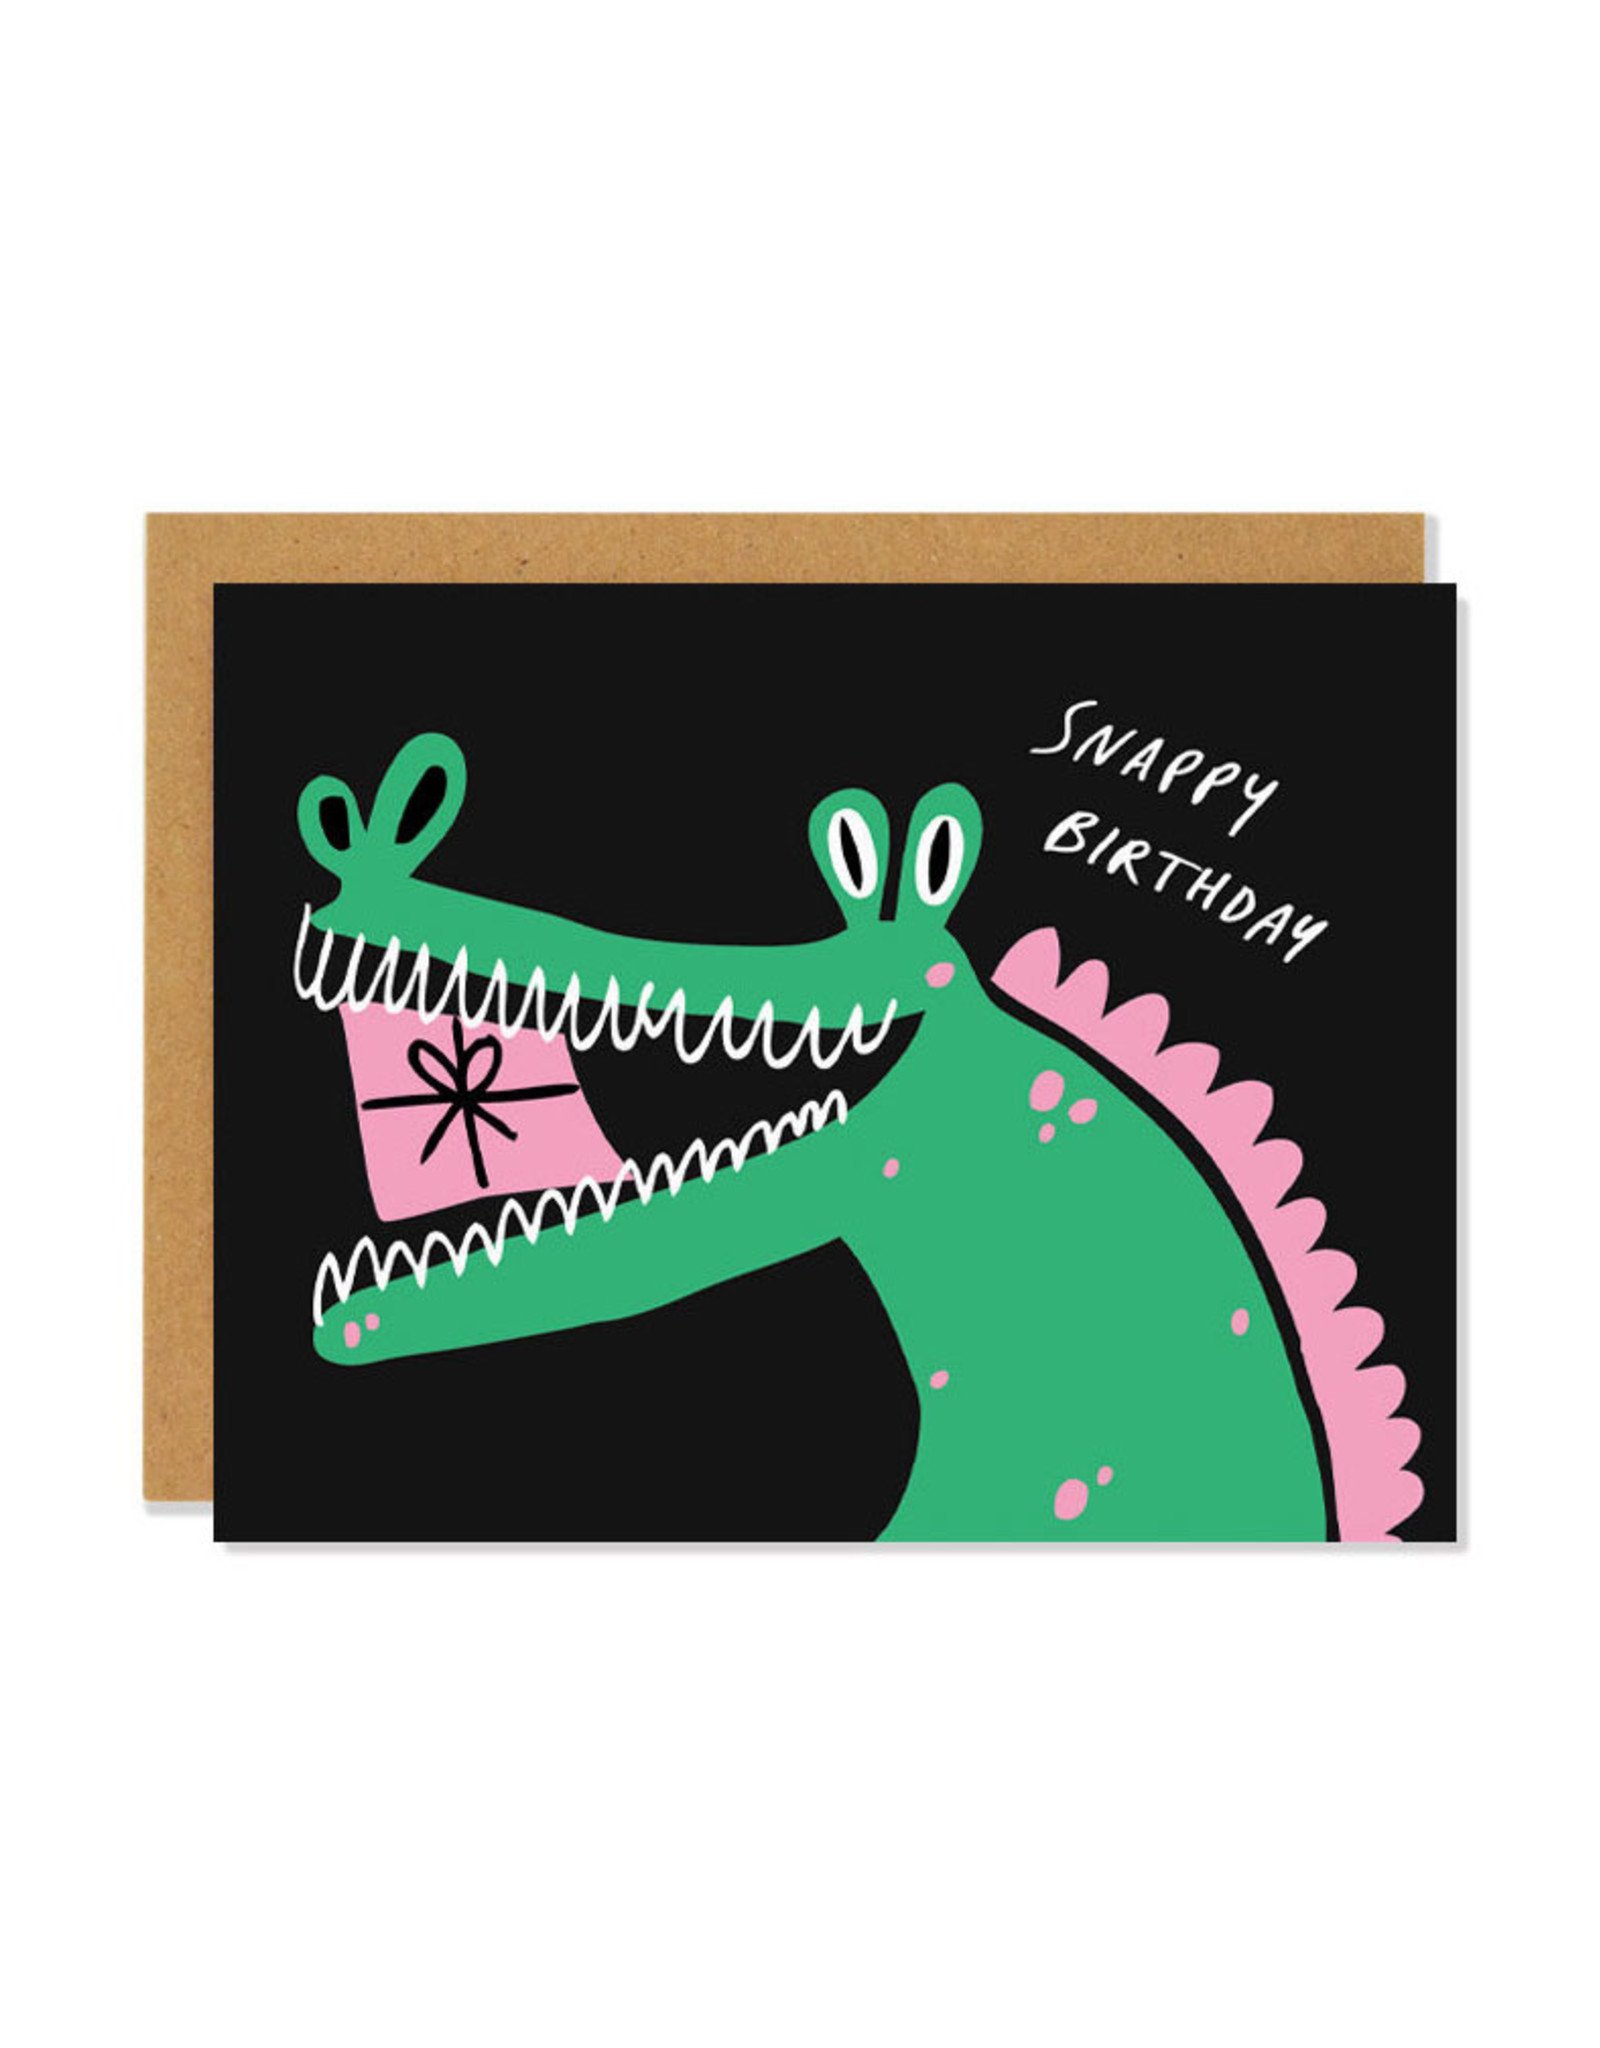 Snappy Birthday Gator Greeting Card